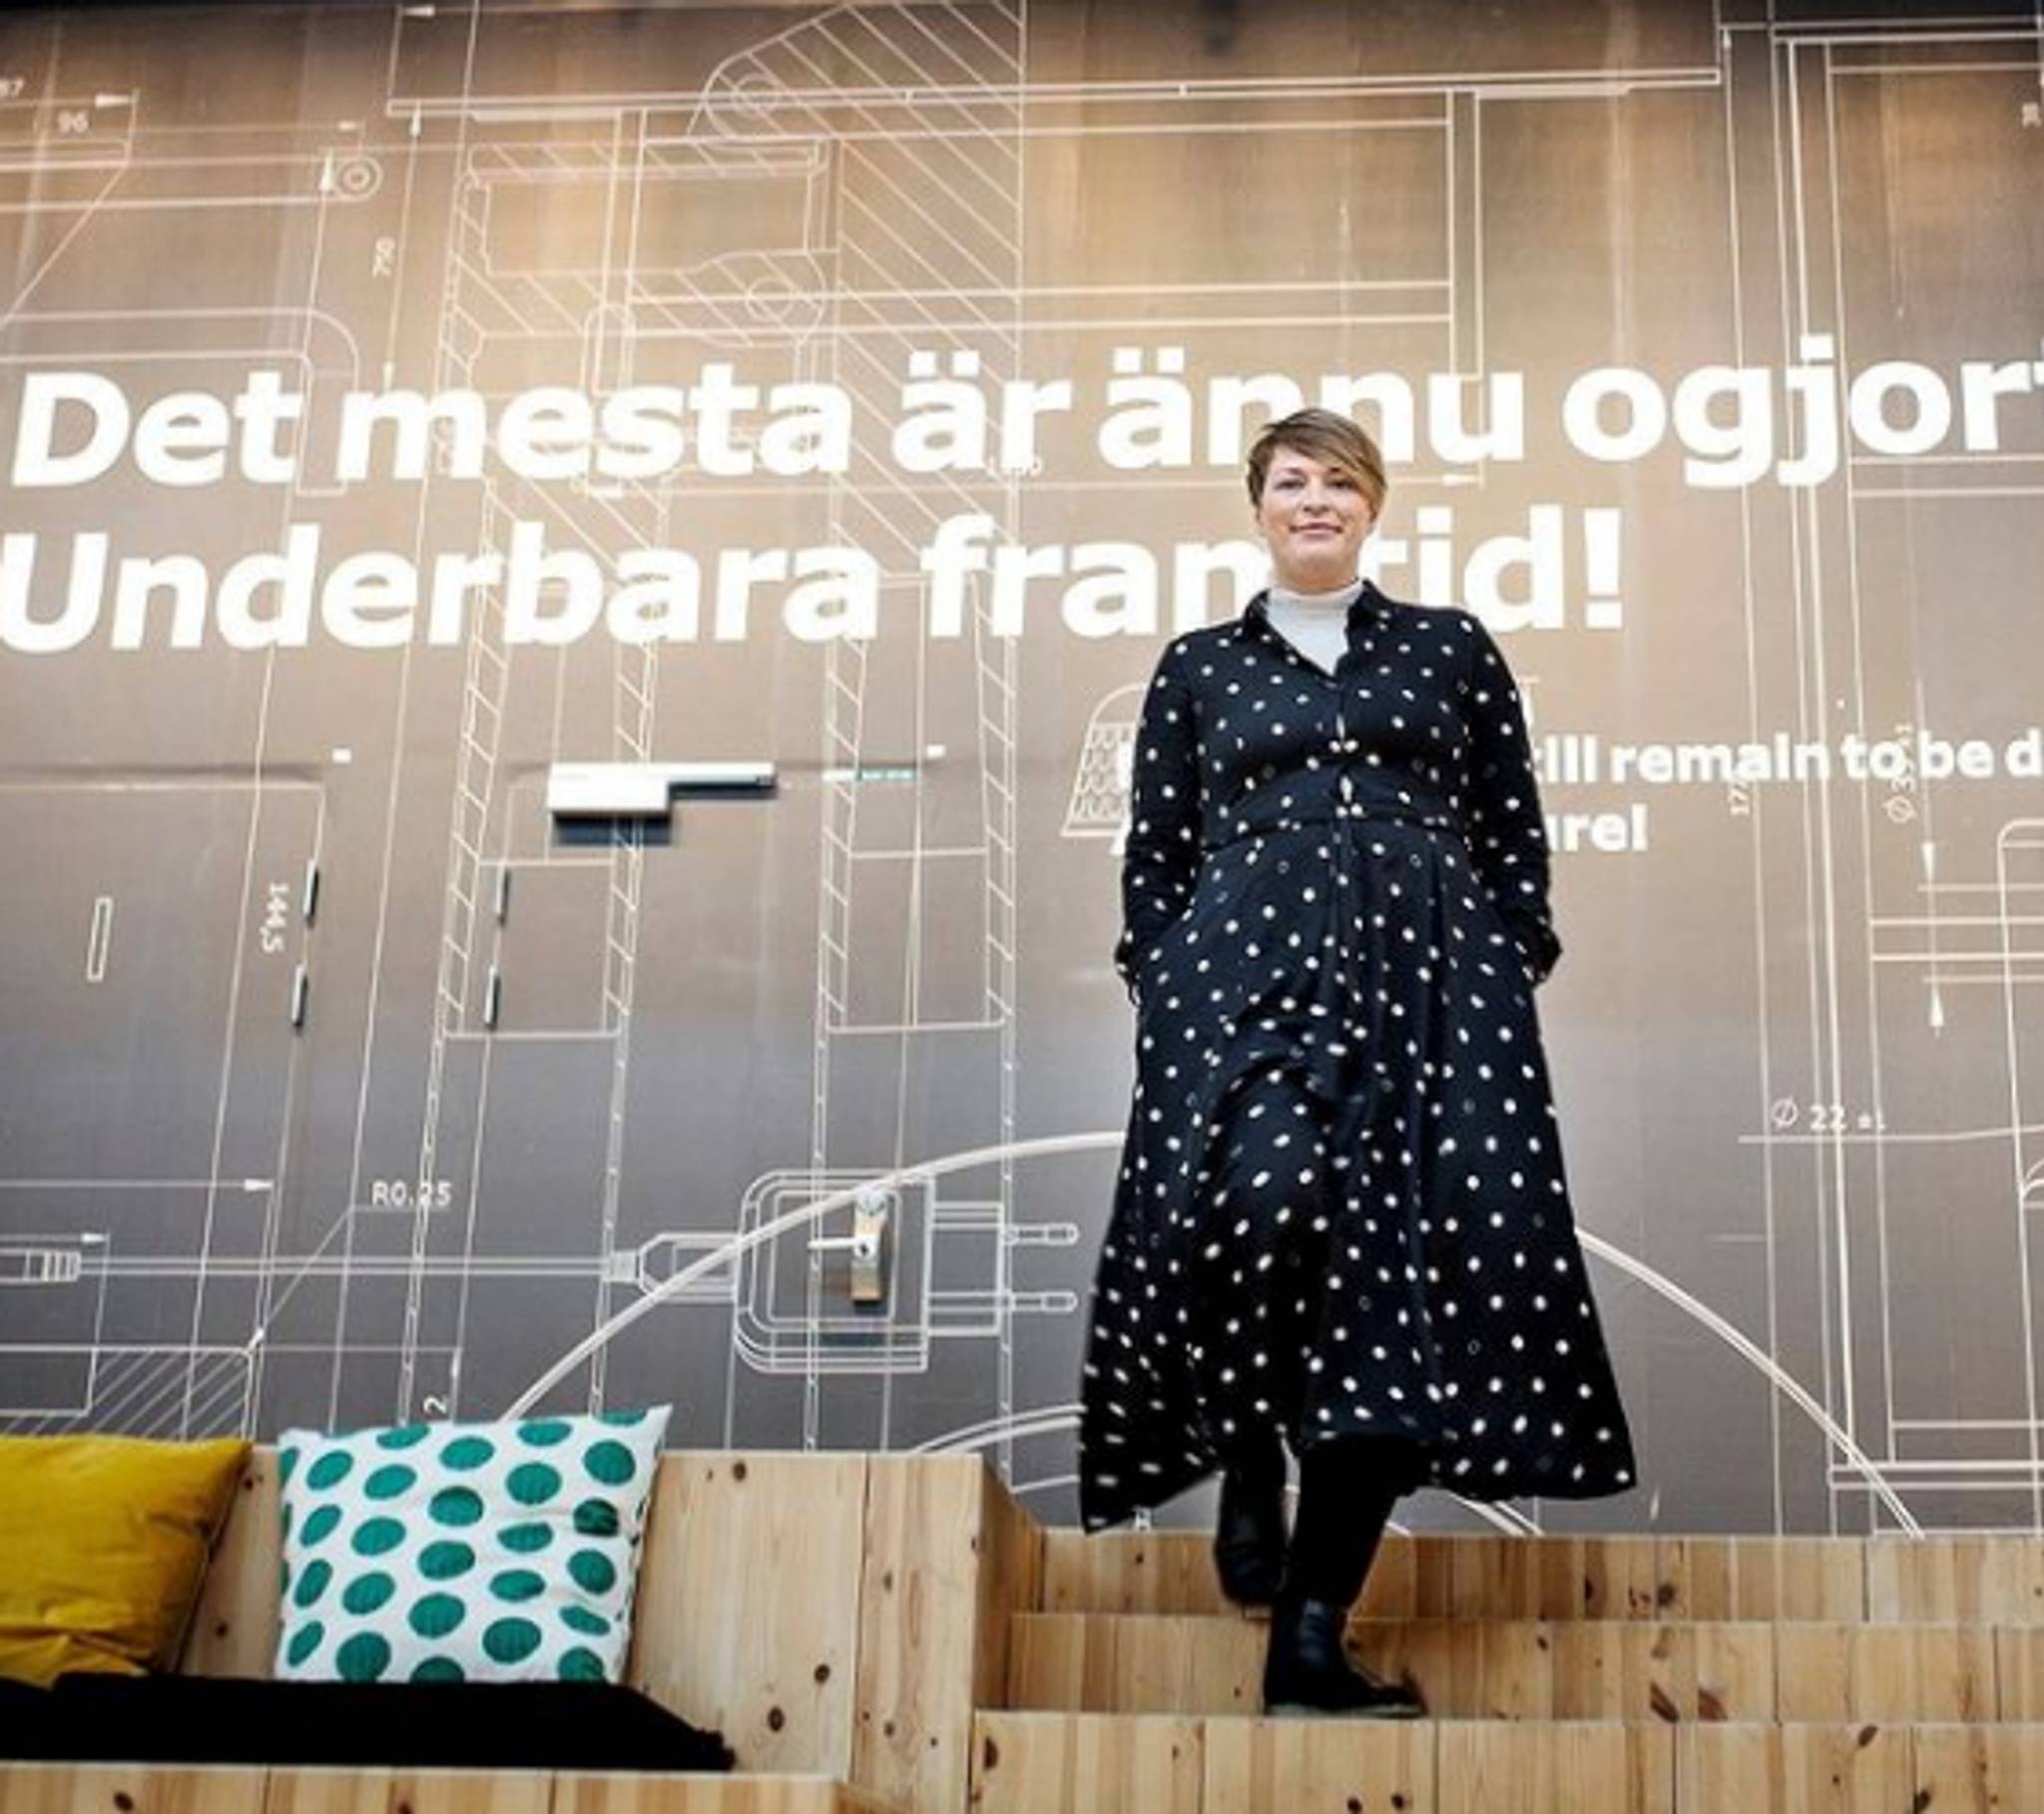 IKEA gamifies conversations around inequalities at home